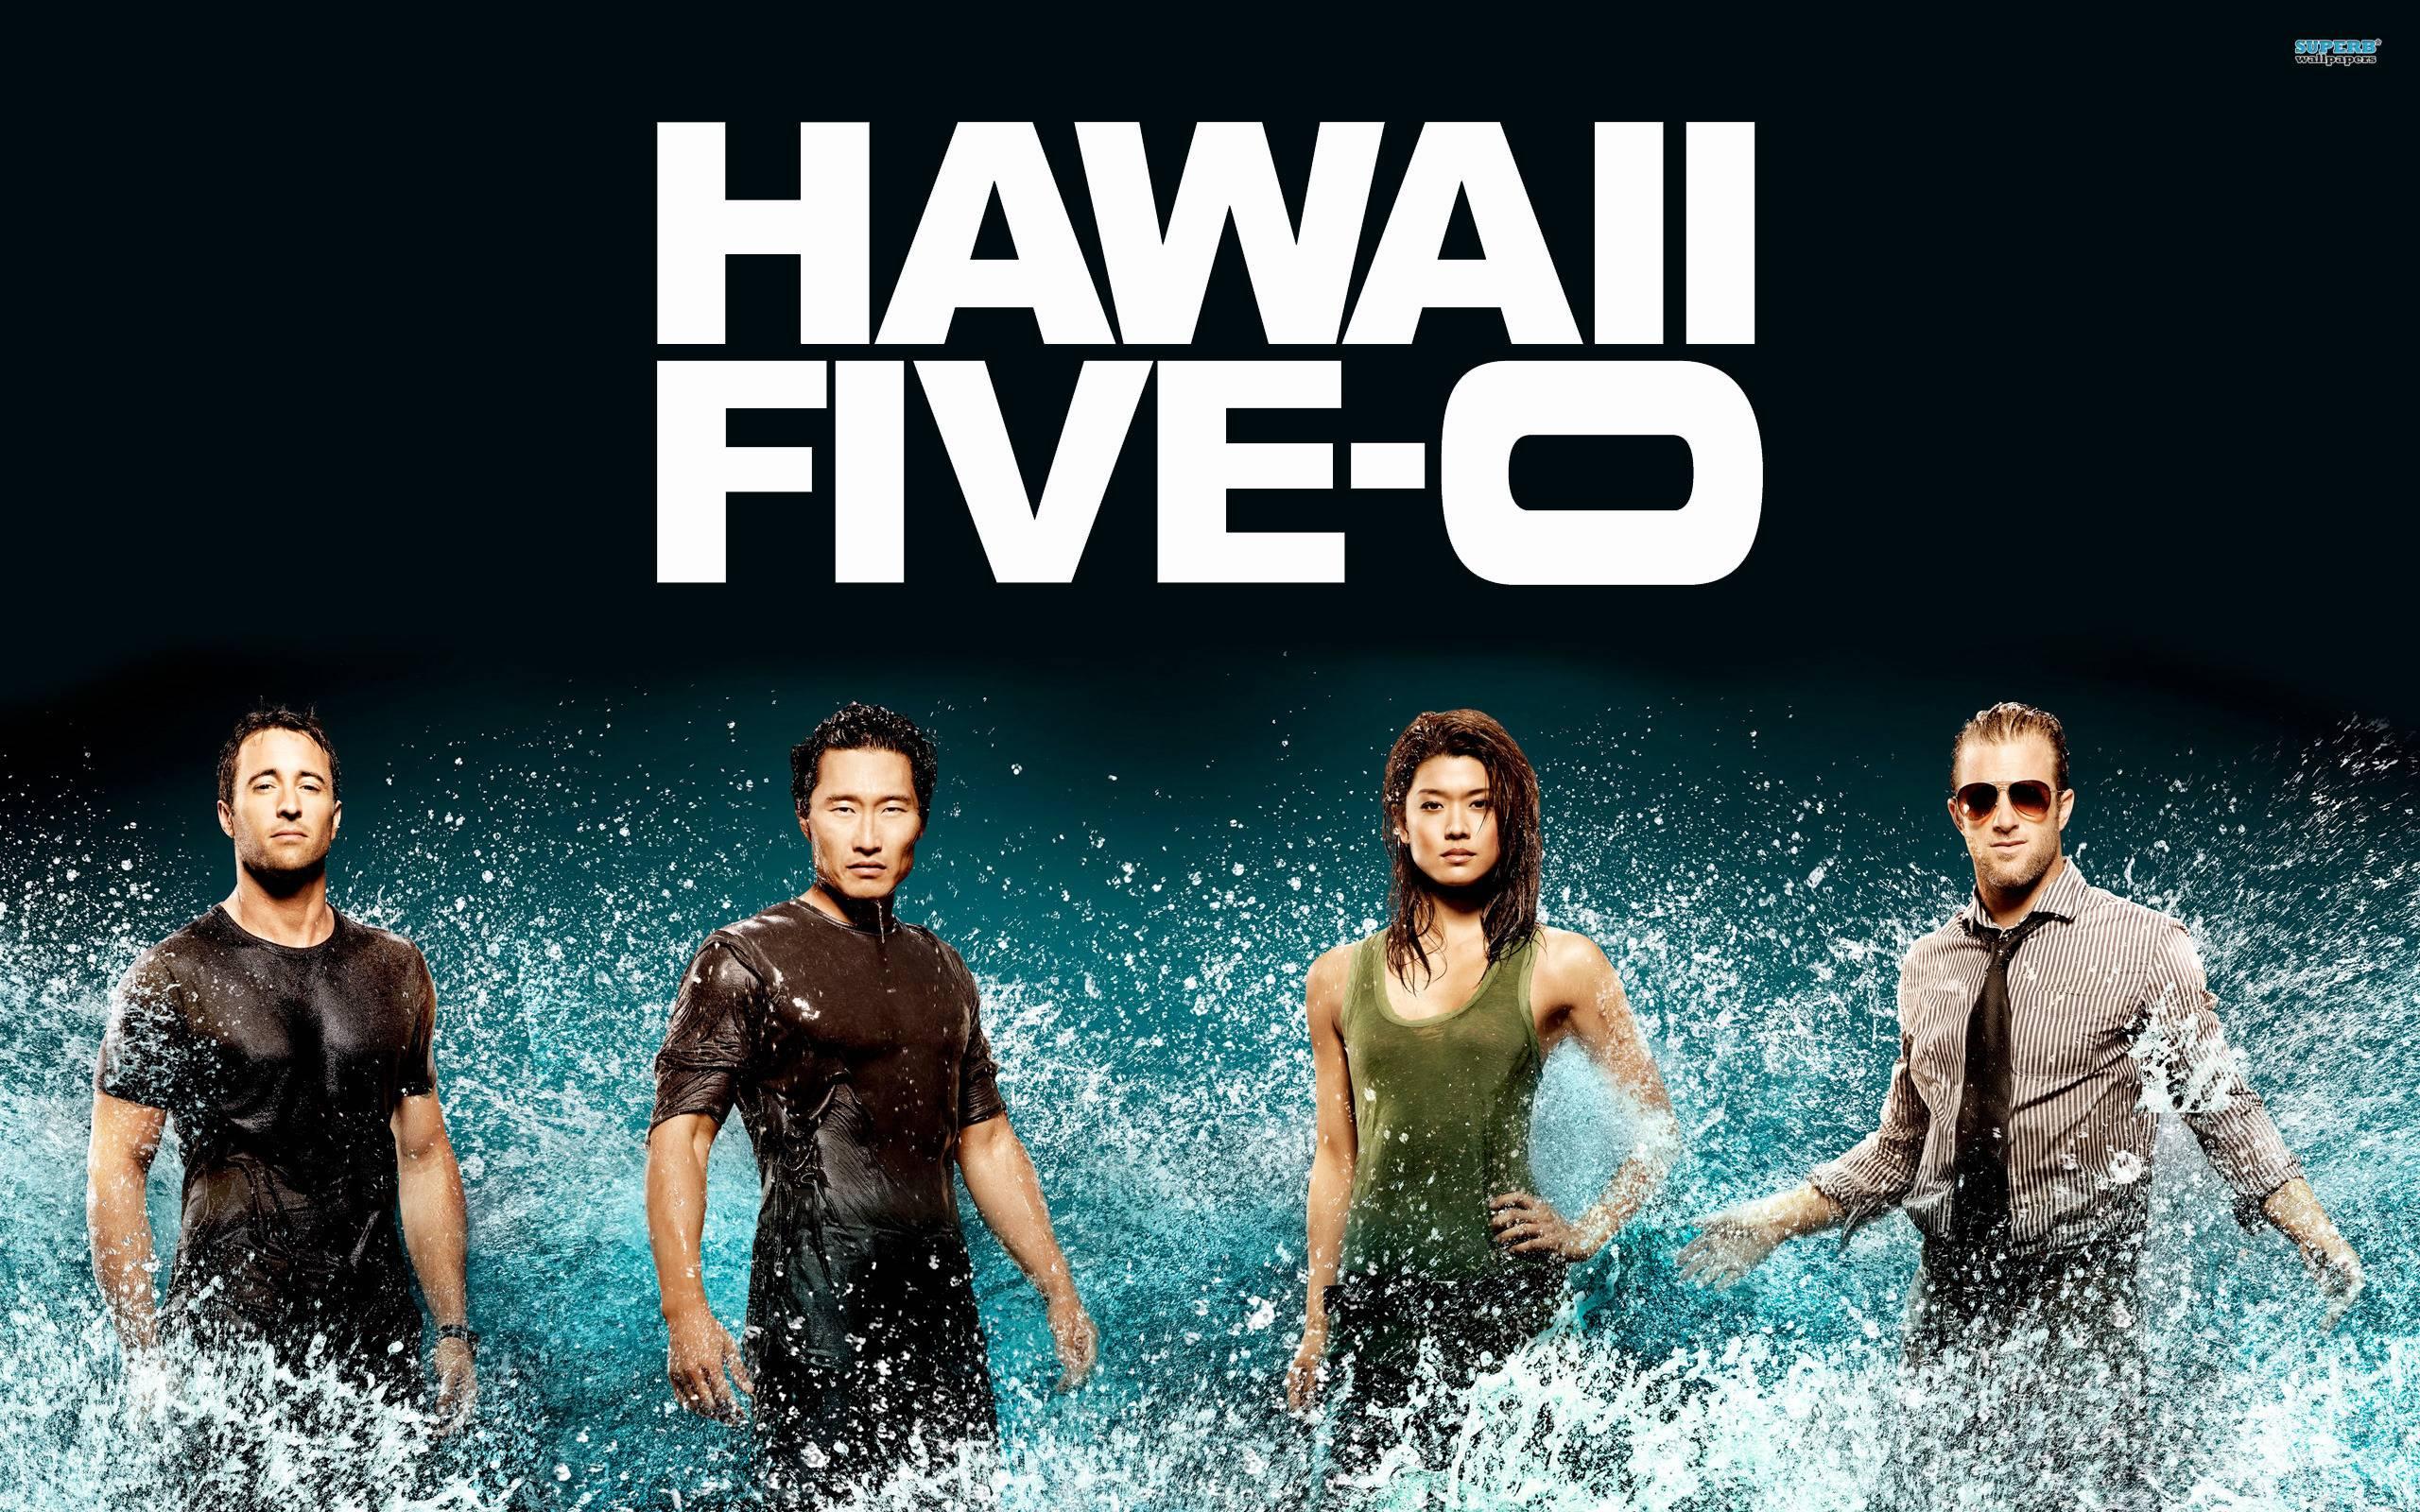 Hawaii Five-0 S03E22 - Subtitles Live